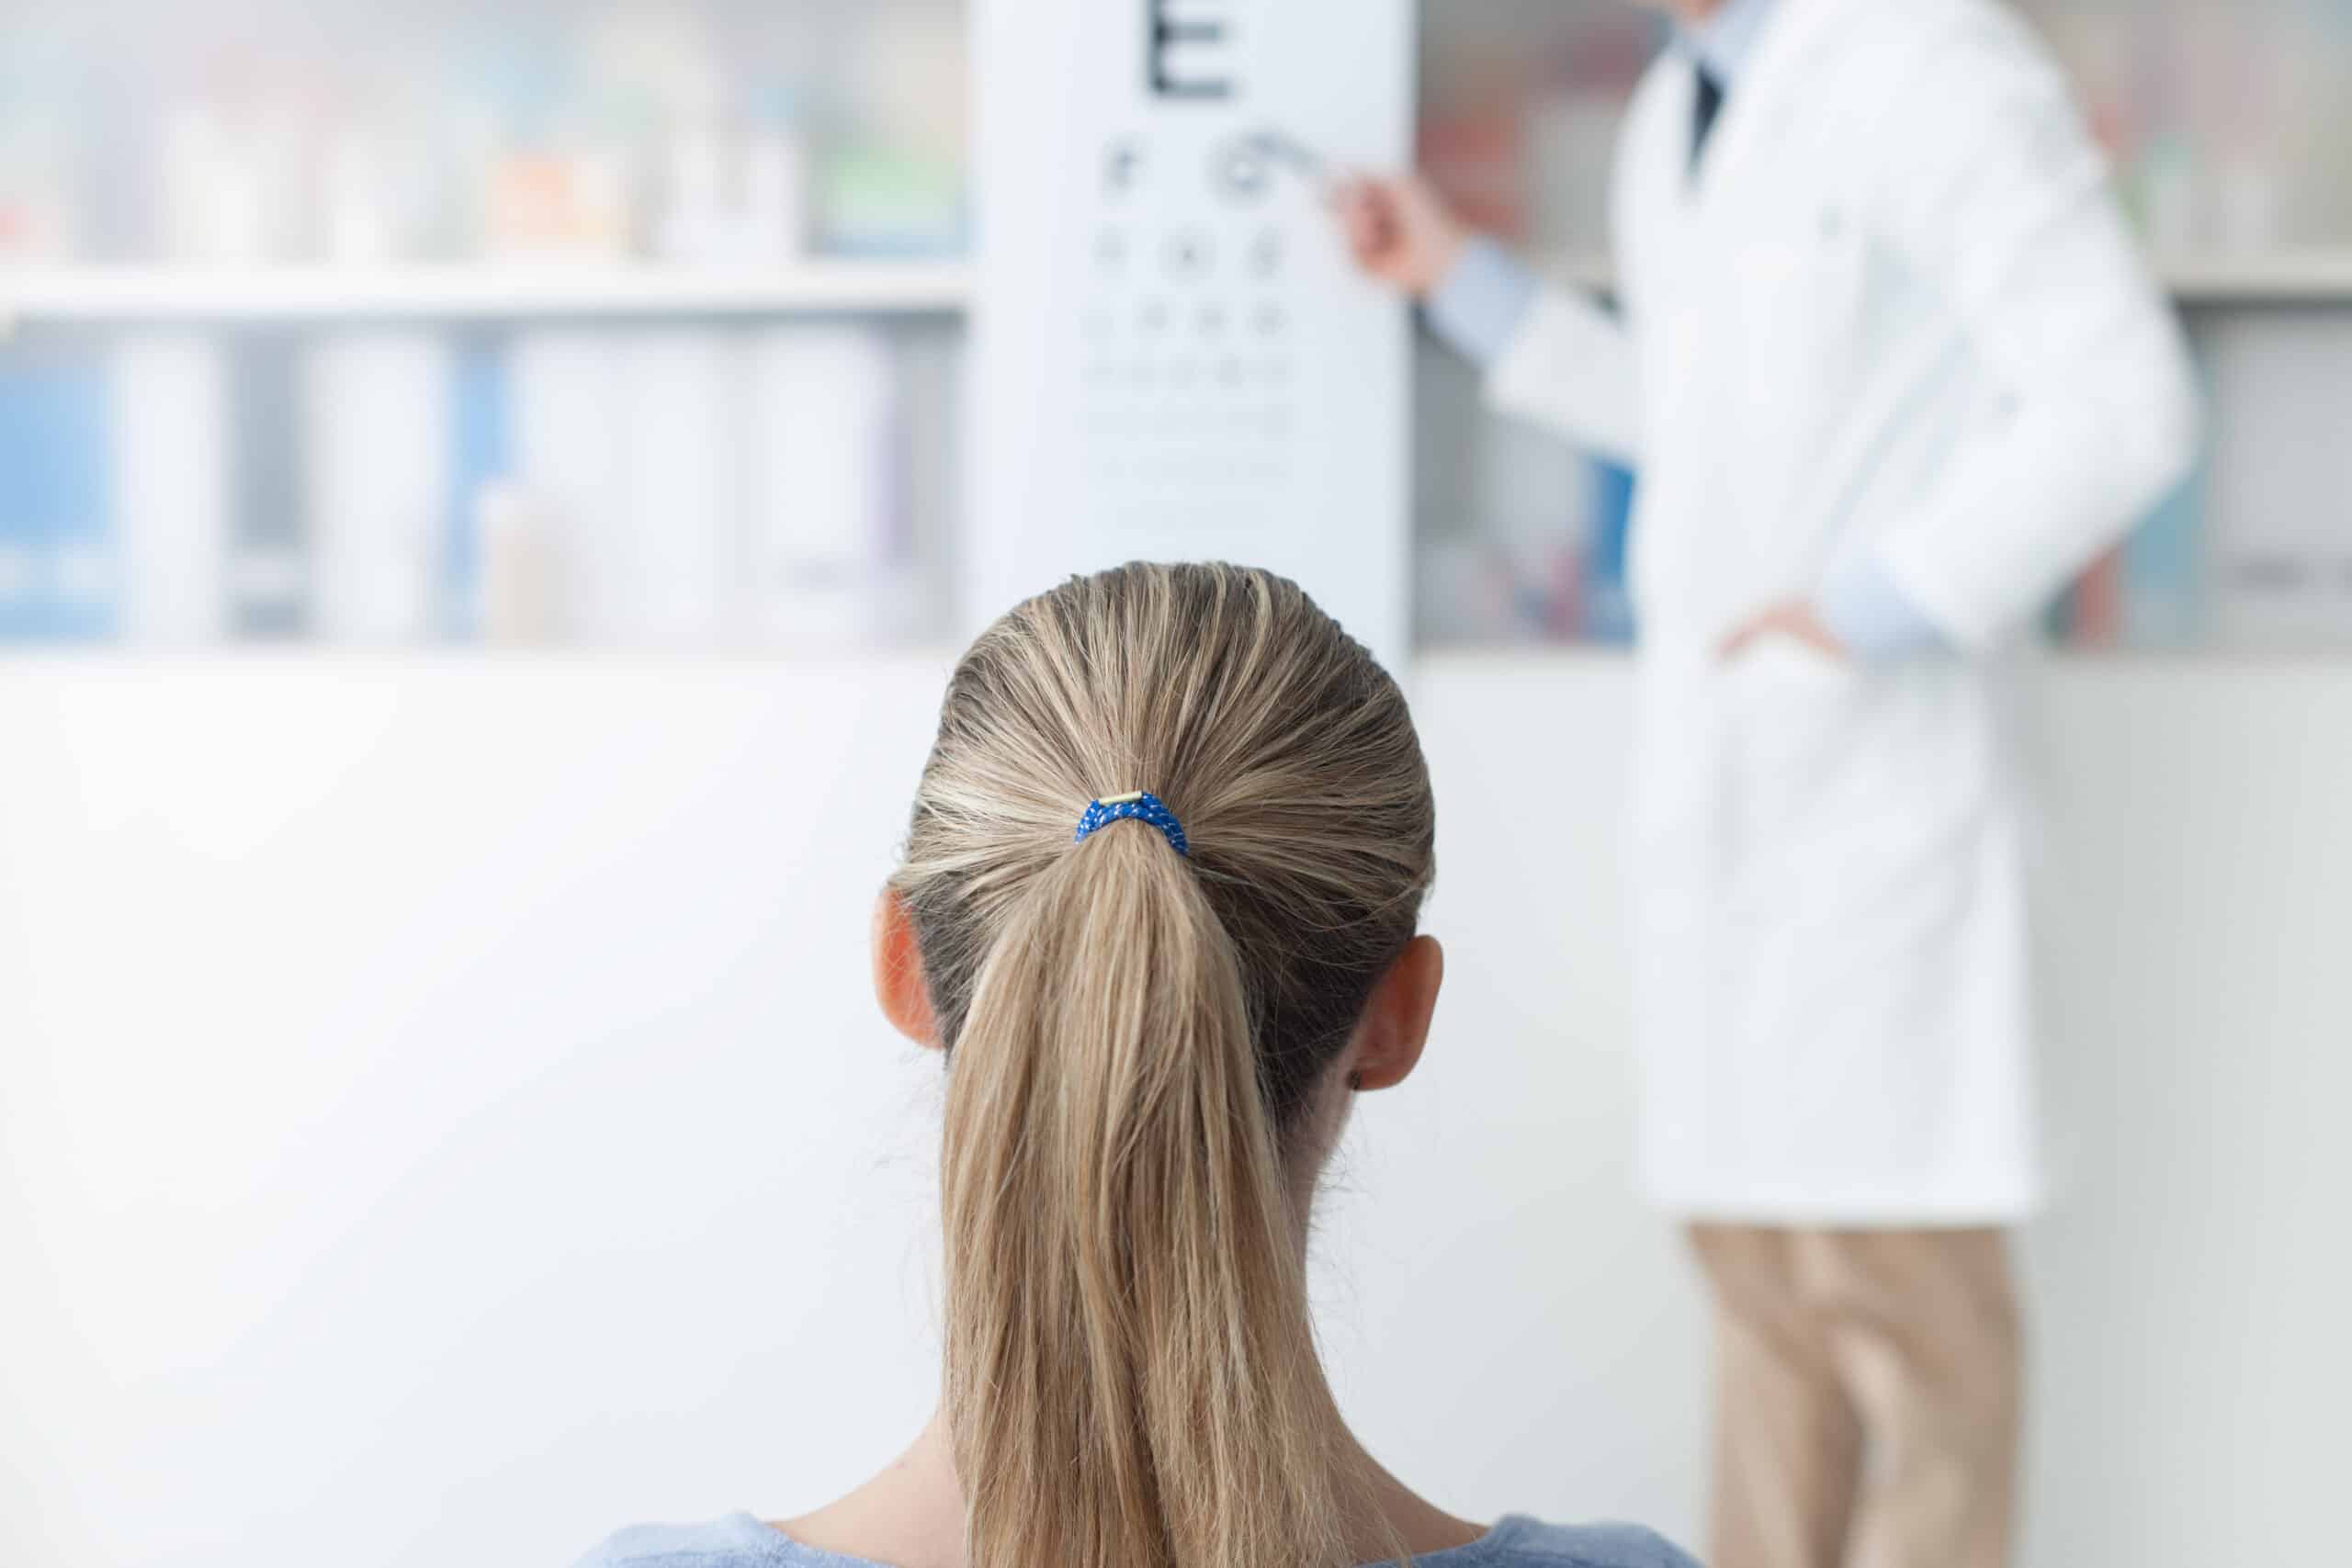 Exam With An Eye Doctor 2021 08 26 22 39 53 Utc Scaled 